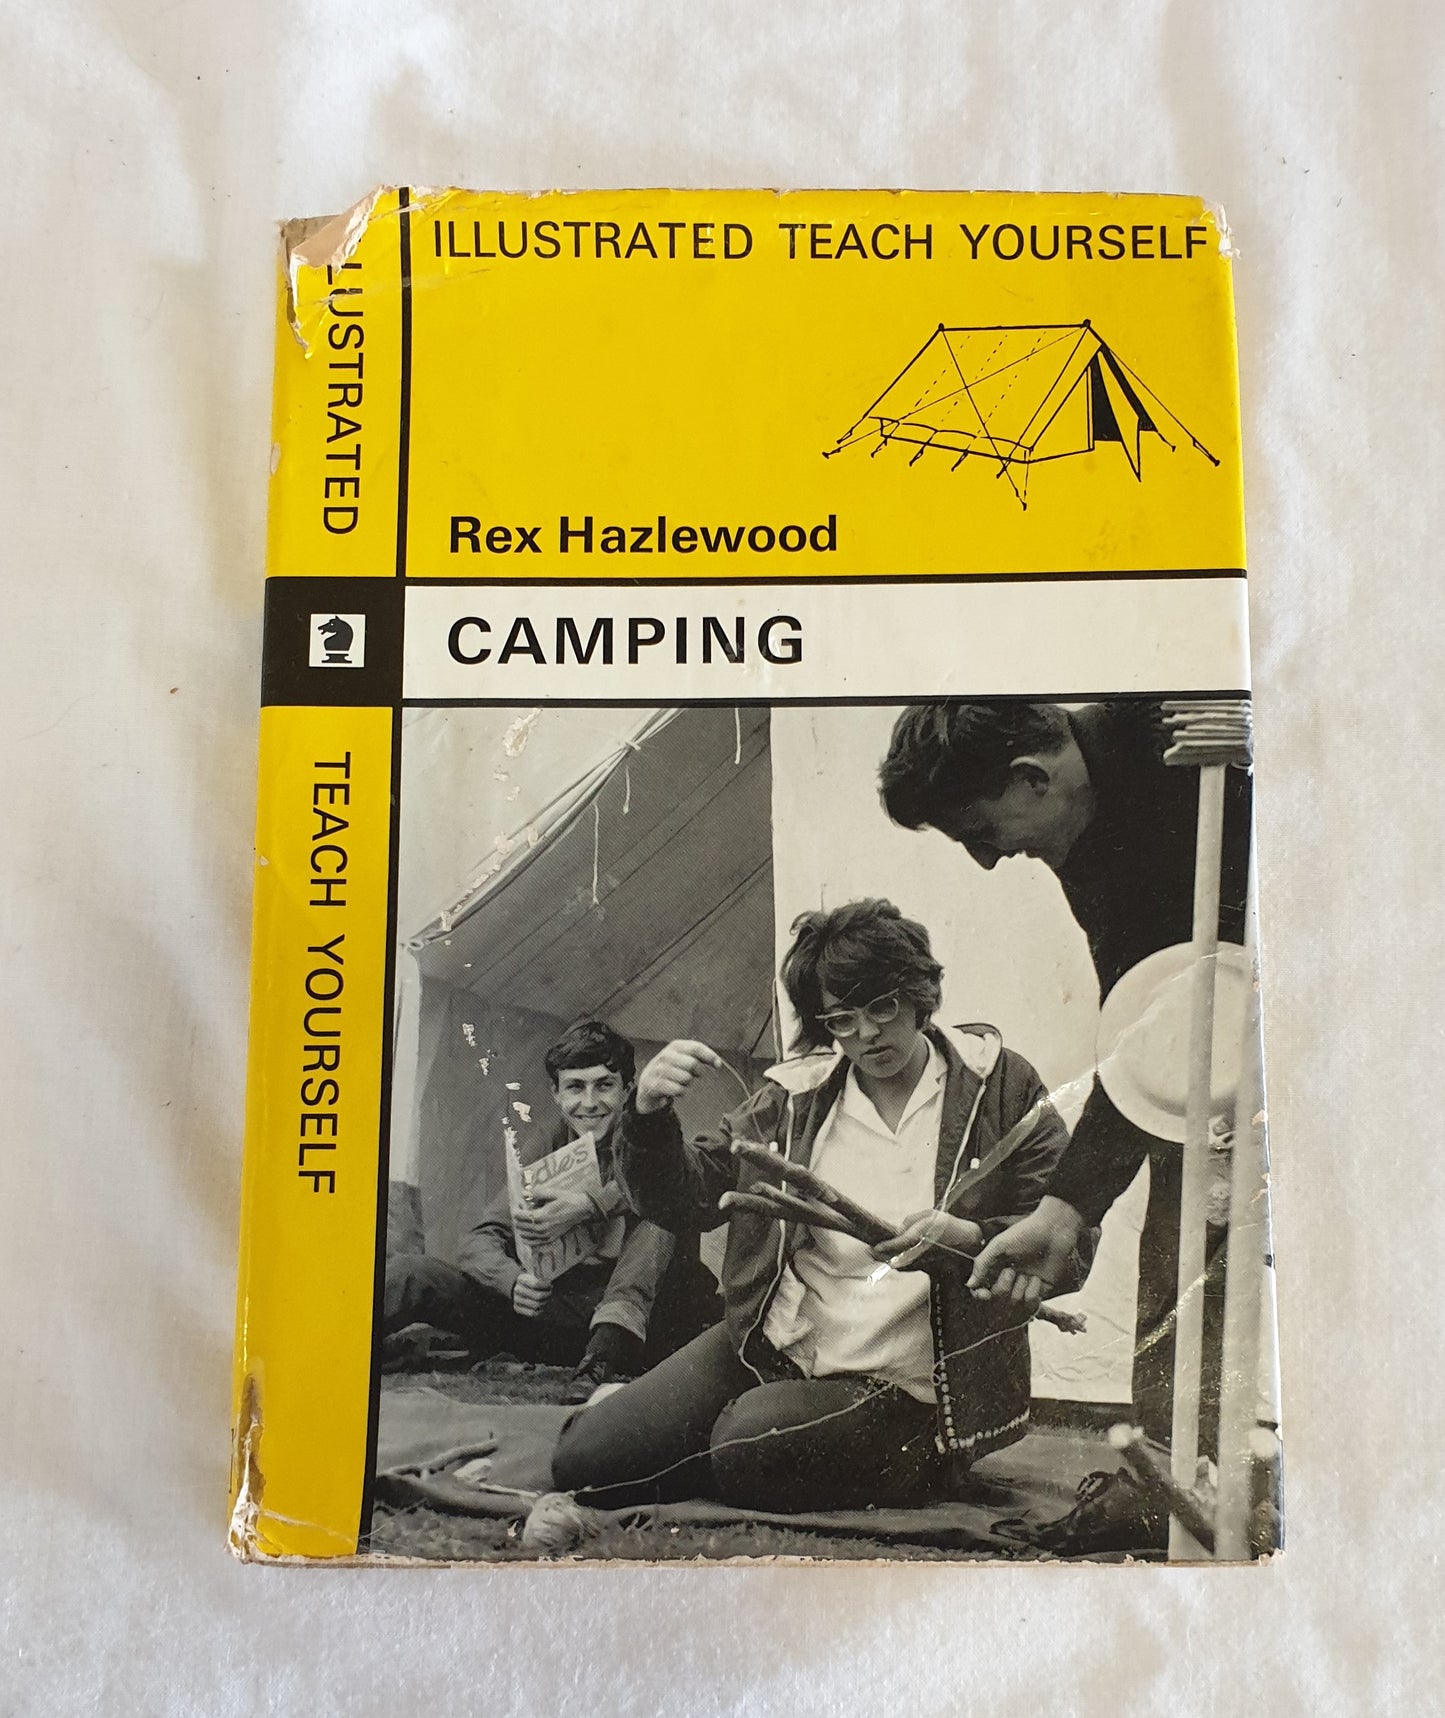 Camping by Rex Hazlewood